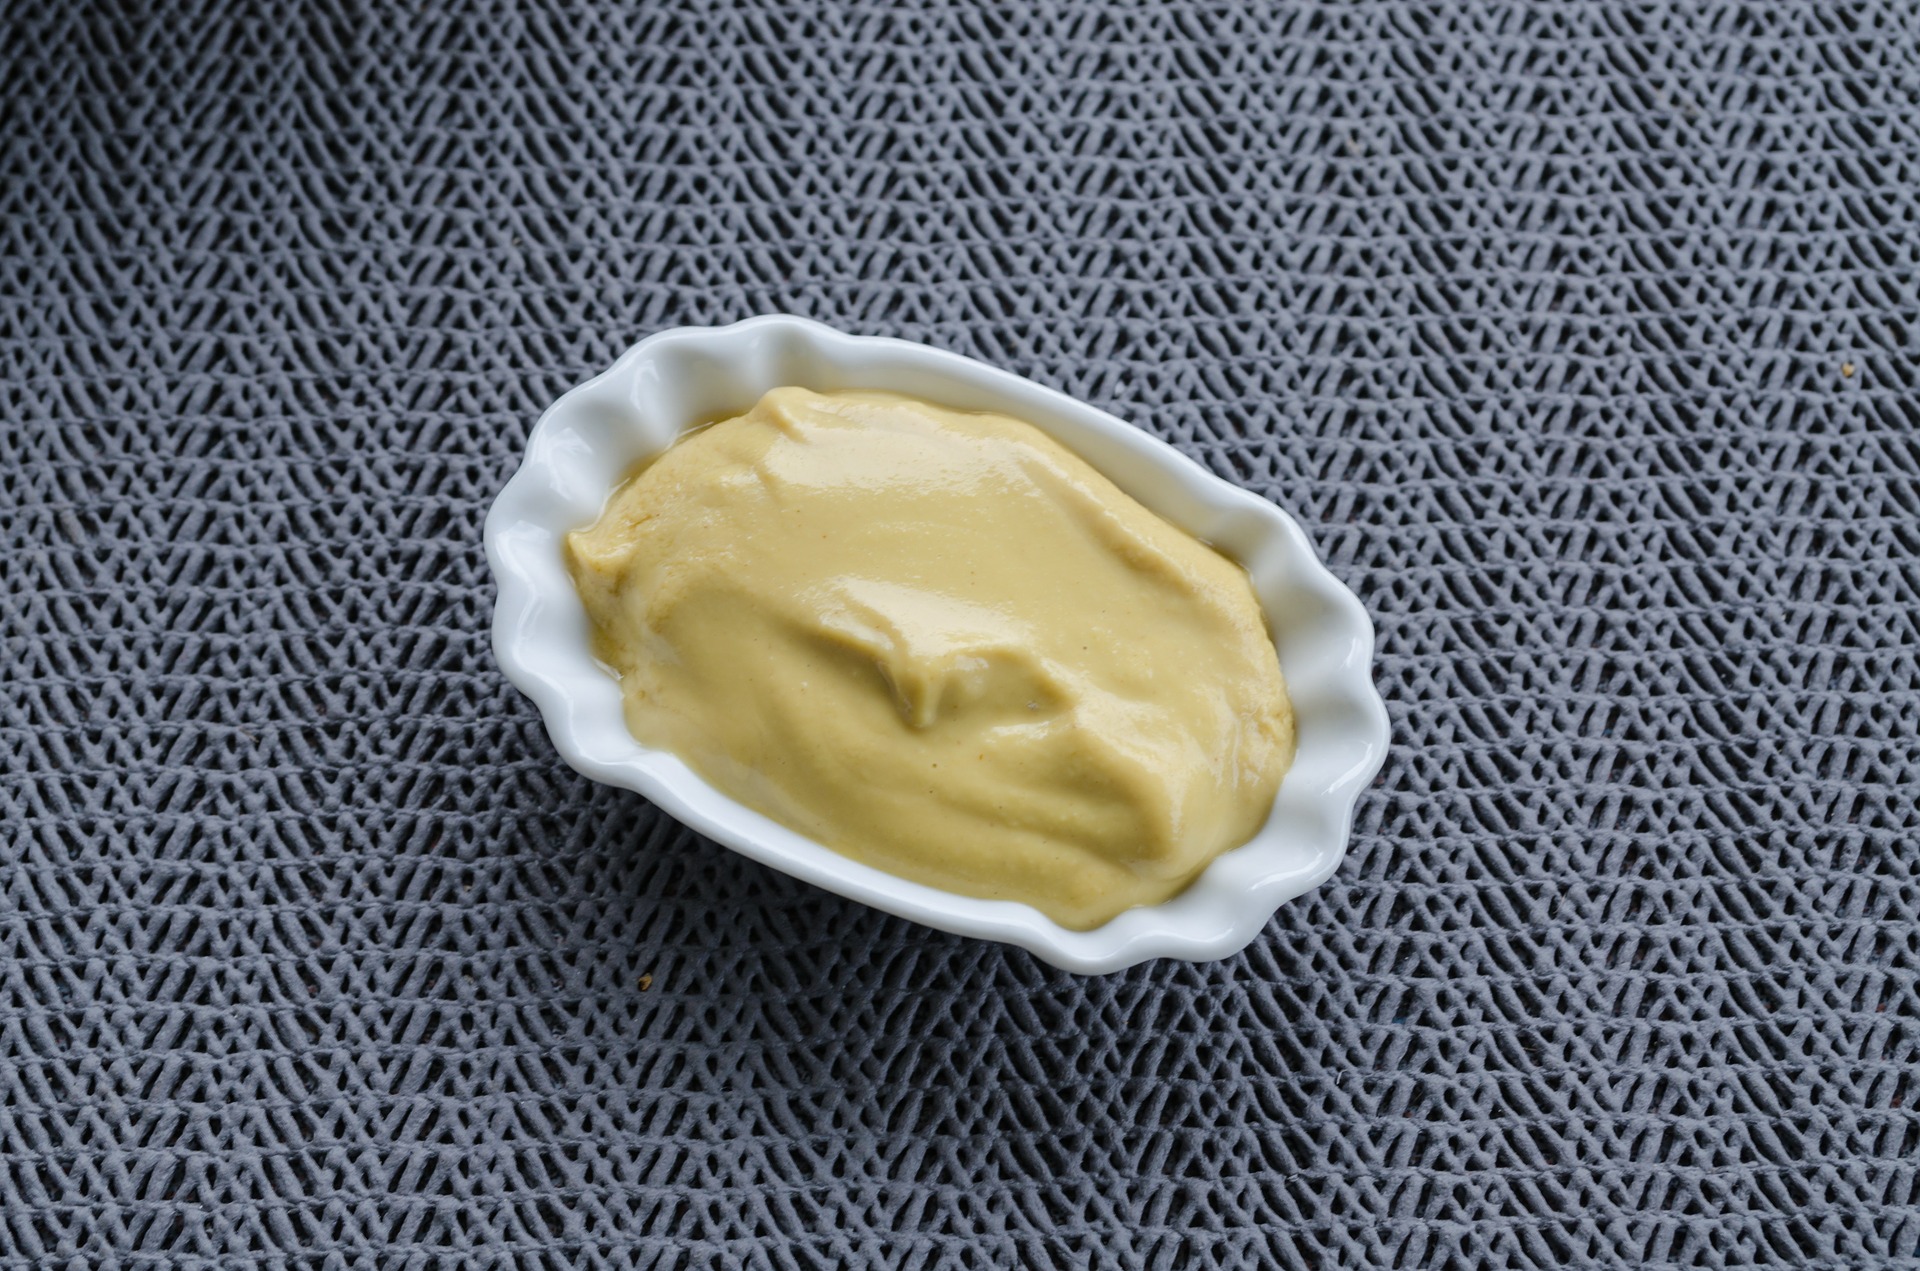 Paranafloden Fjernelse Penneven Mustard (condiment) - Wikipedia